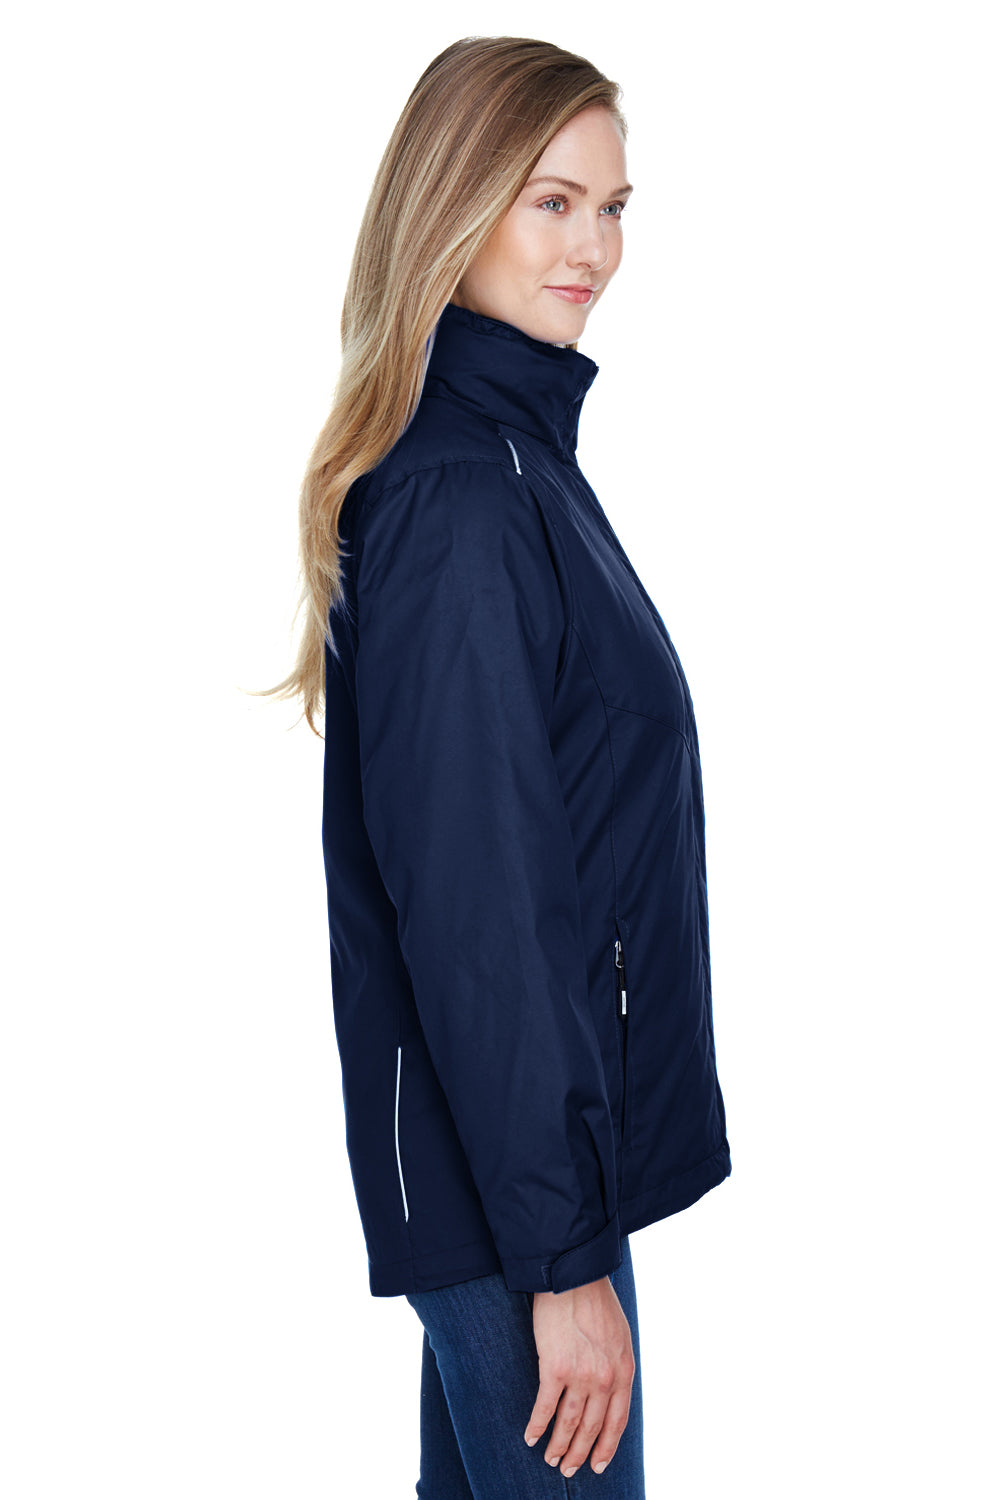 Core 365 78205 Womens Region 3-in-1 Water Resistant Full Zip Hooded Jacket Navy Blue Side